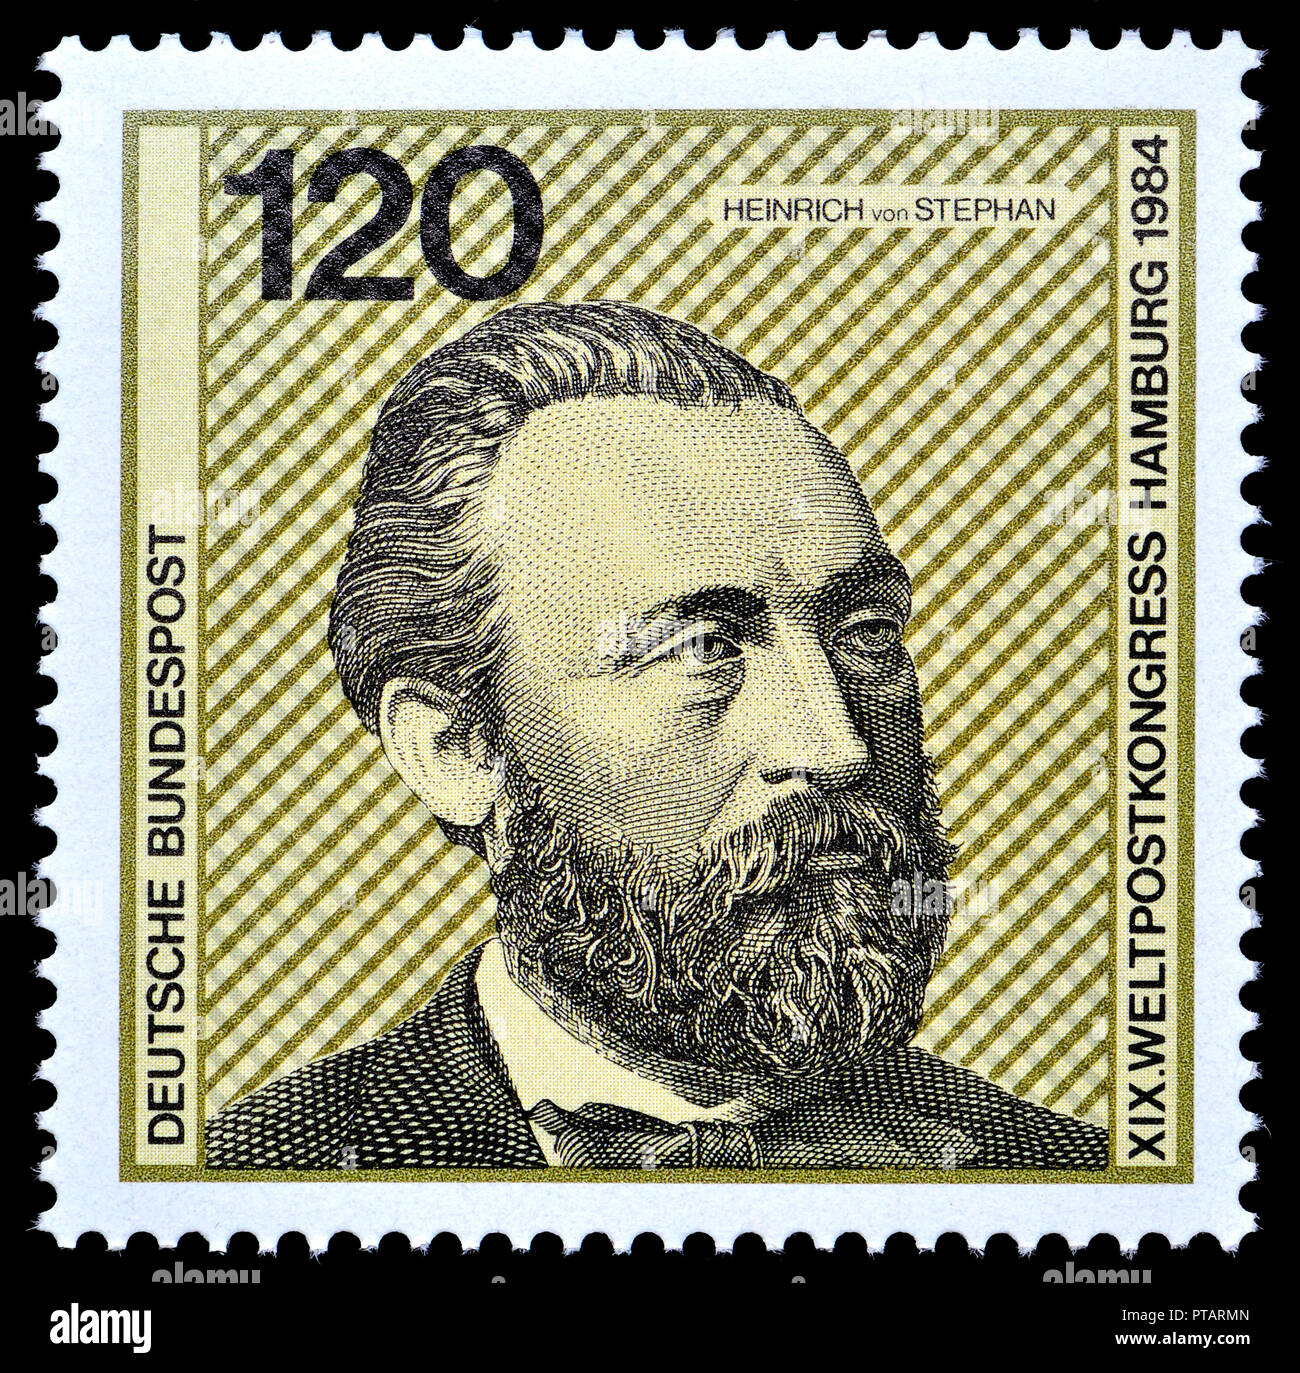 Il tedesco francobollo (1984) : Heinrich von Stephan (Ernst Heinrich Wilhelm Stephan: 1831 - 1897) generale post direttore per l'impero tedesco che reorg Foto Stock